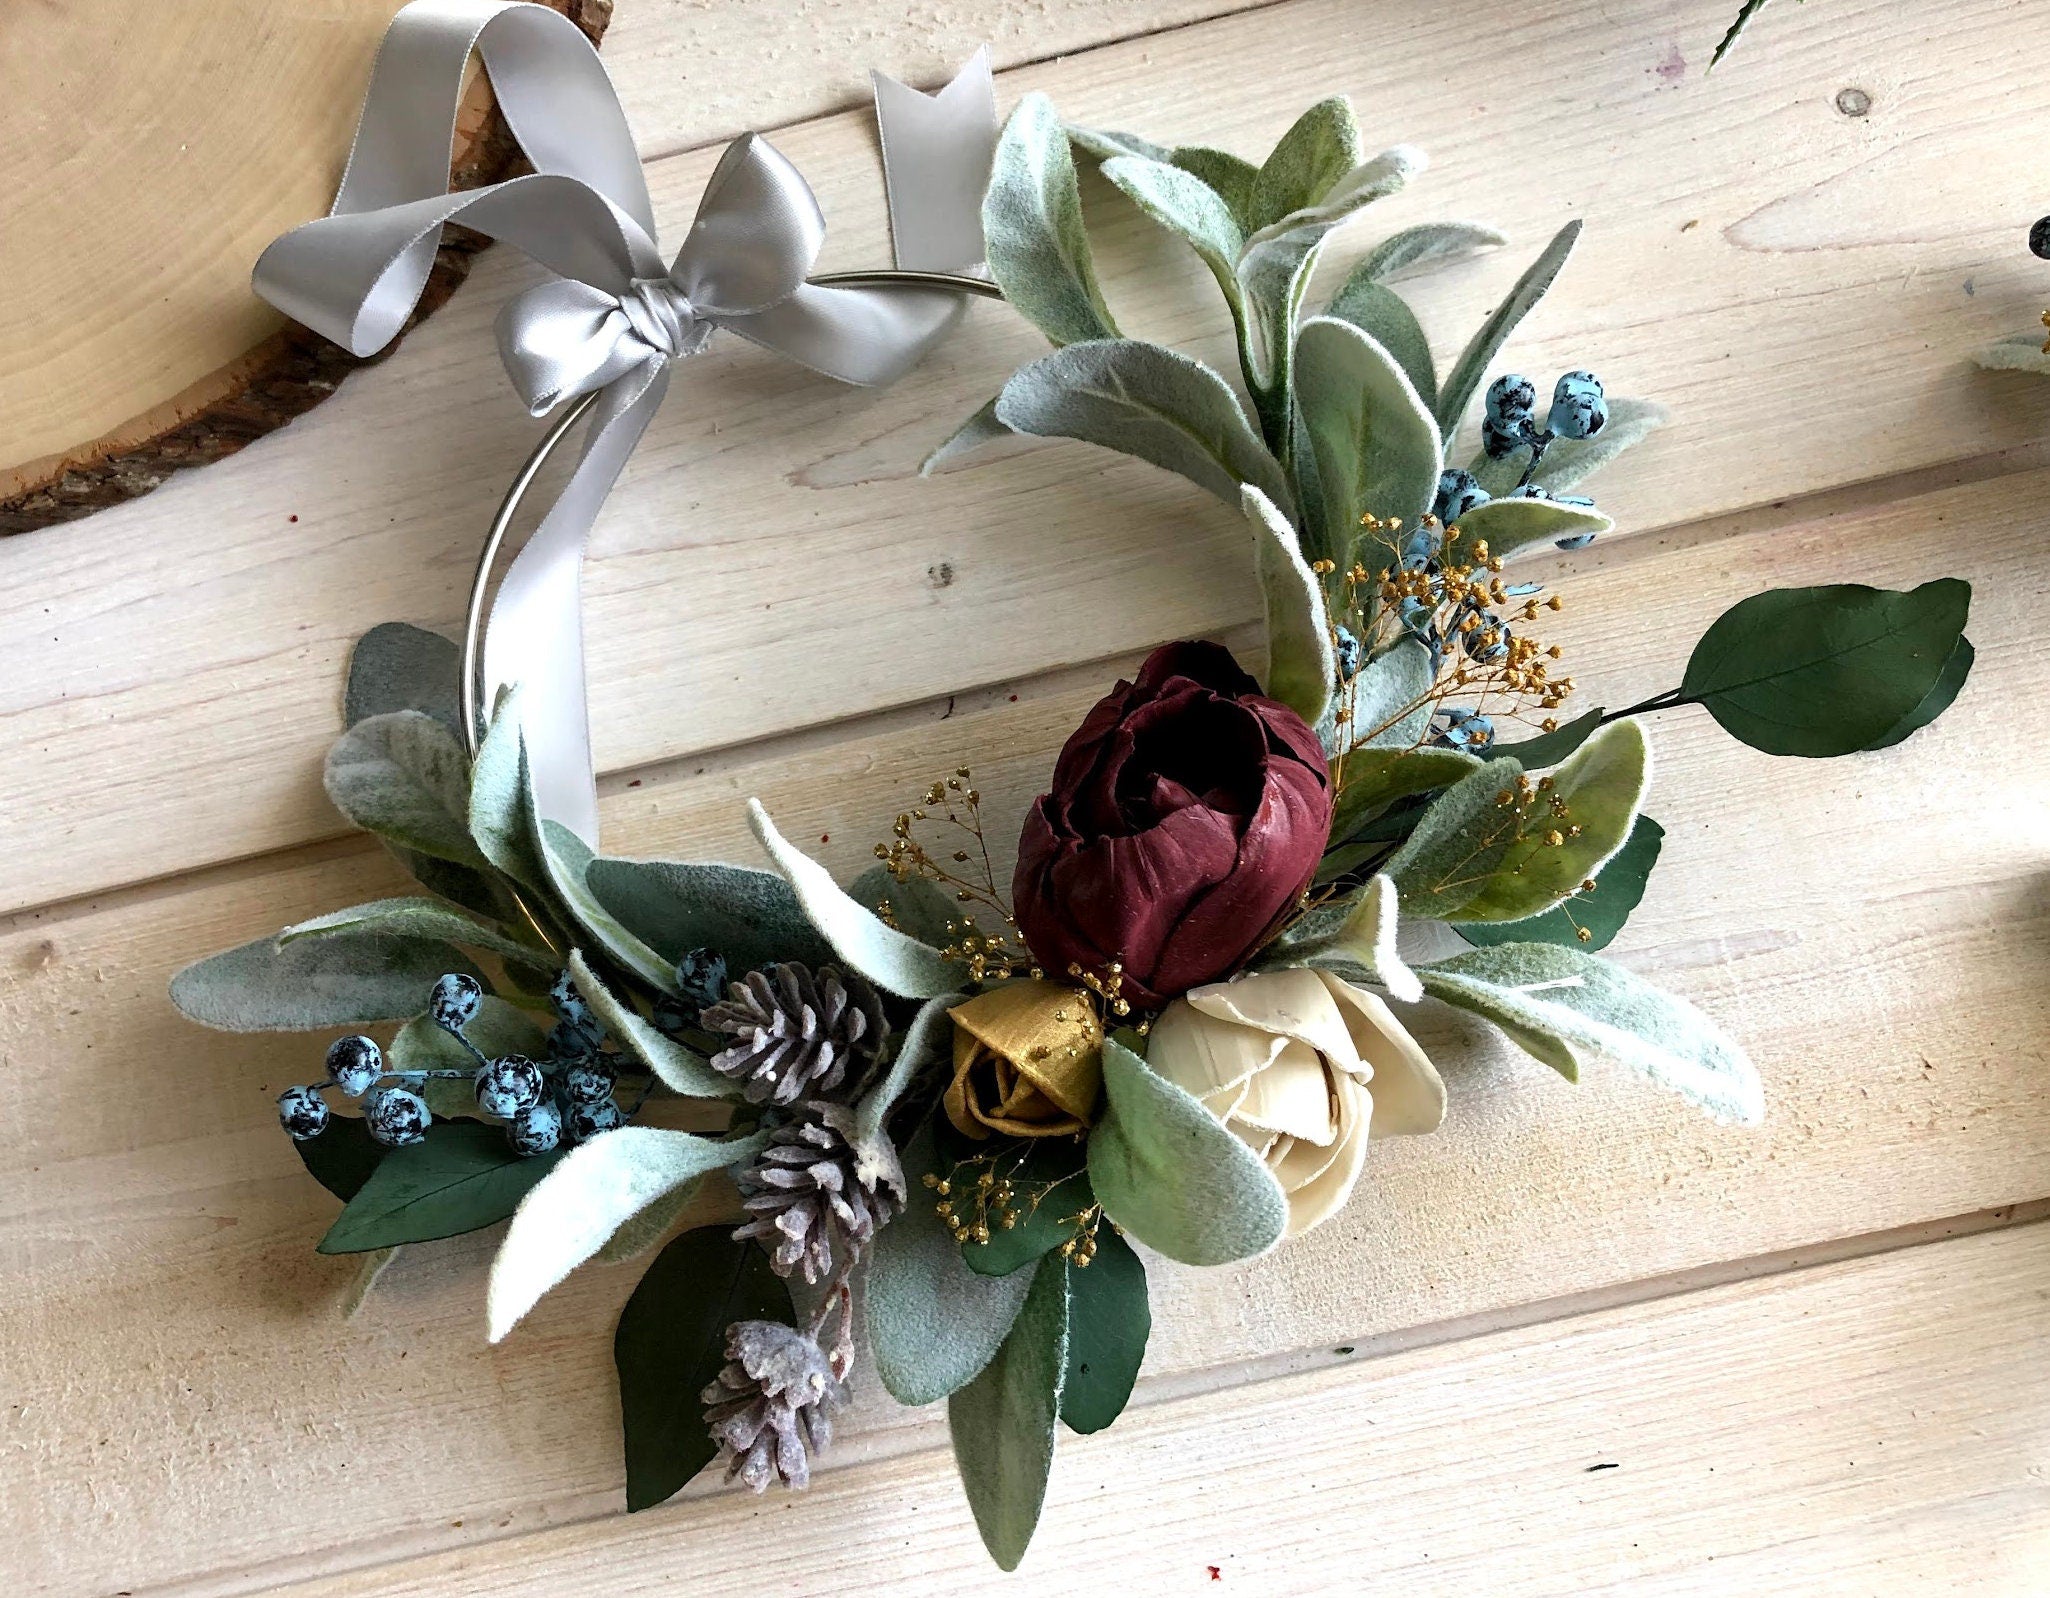 FlowerDreamsBoutique Sage Green Dusty Blue Flower Crown, Winter Wedding Crown, Boho Flower Crown